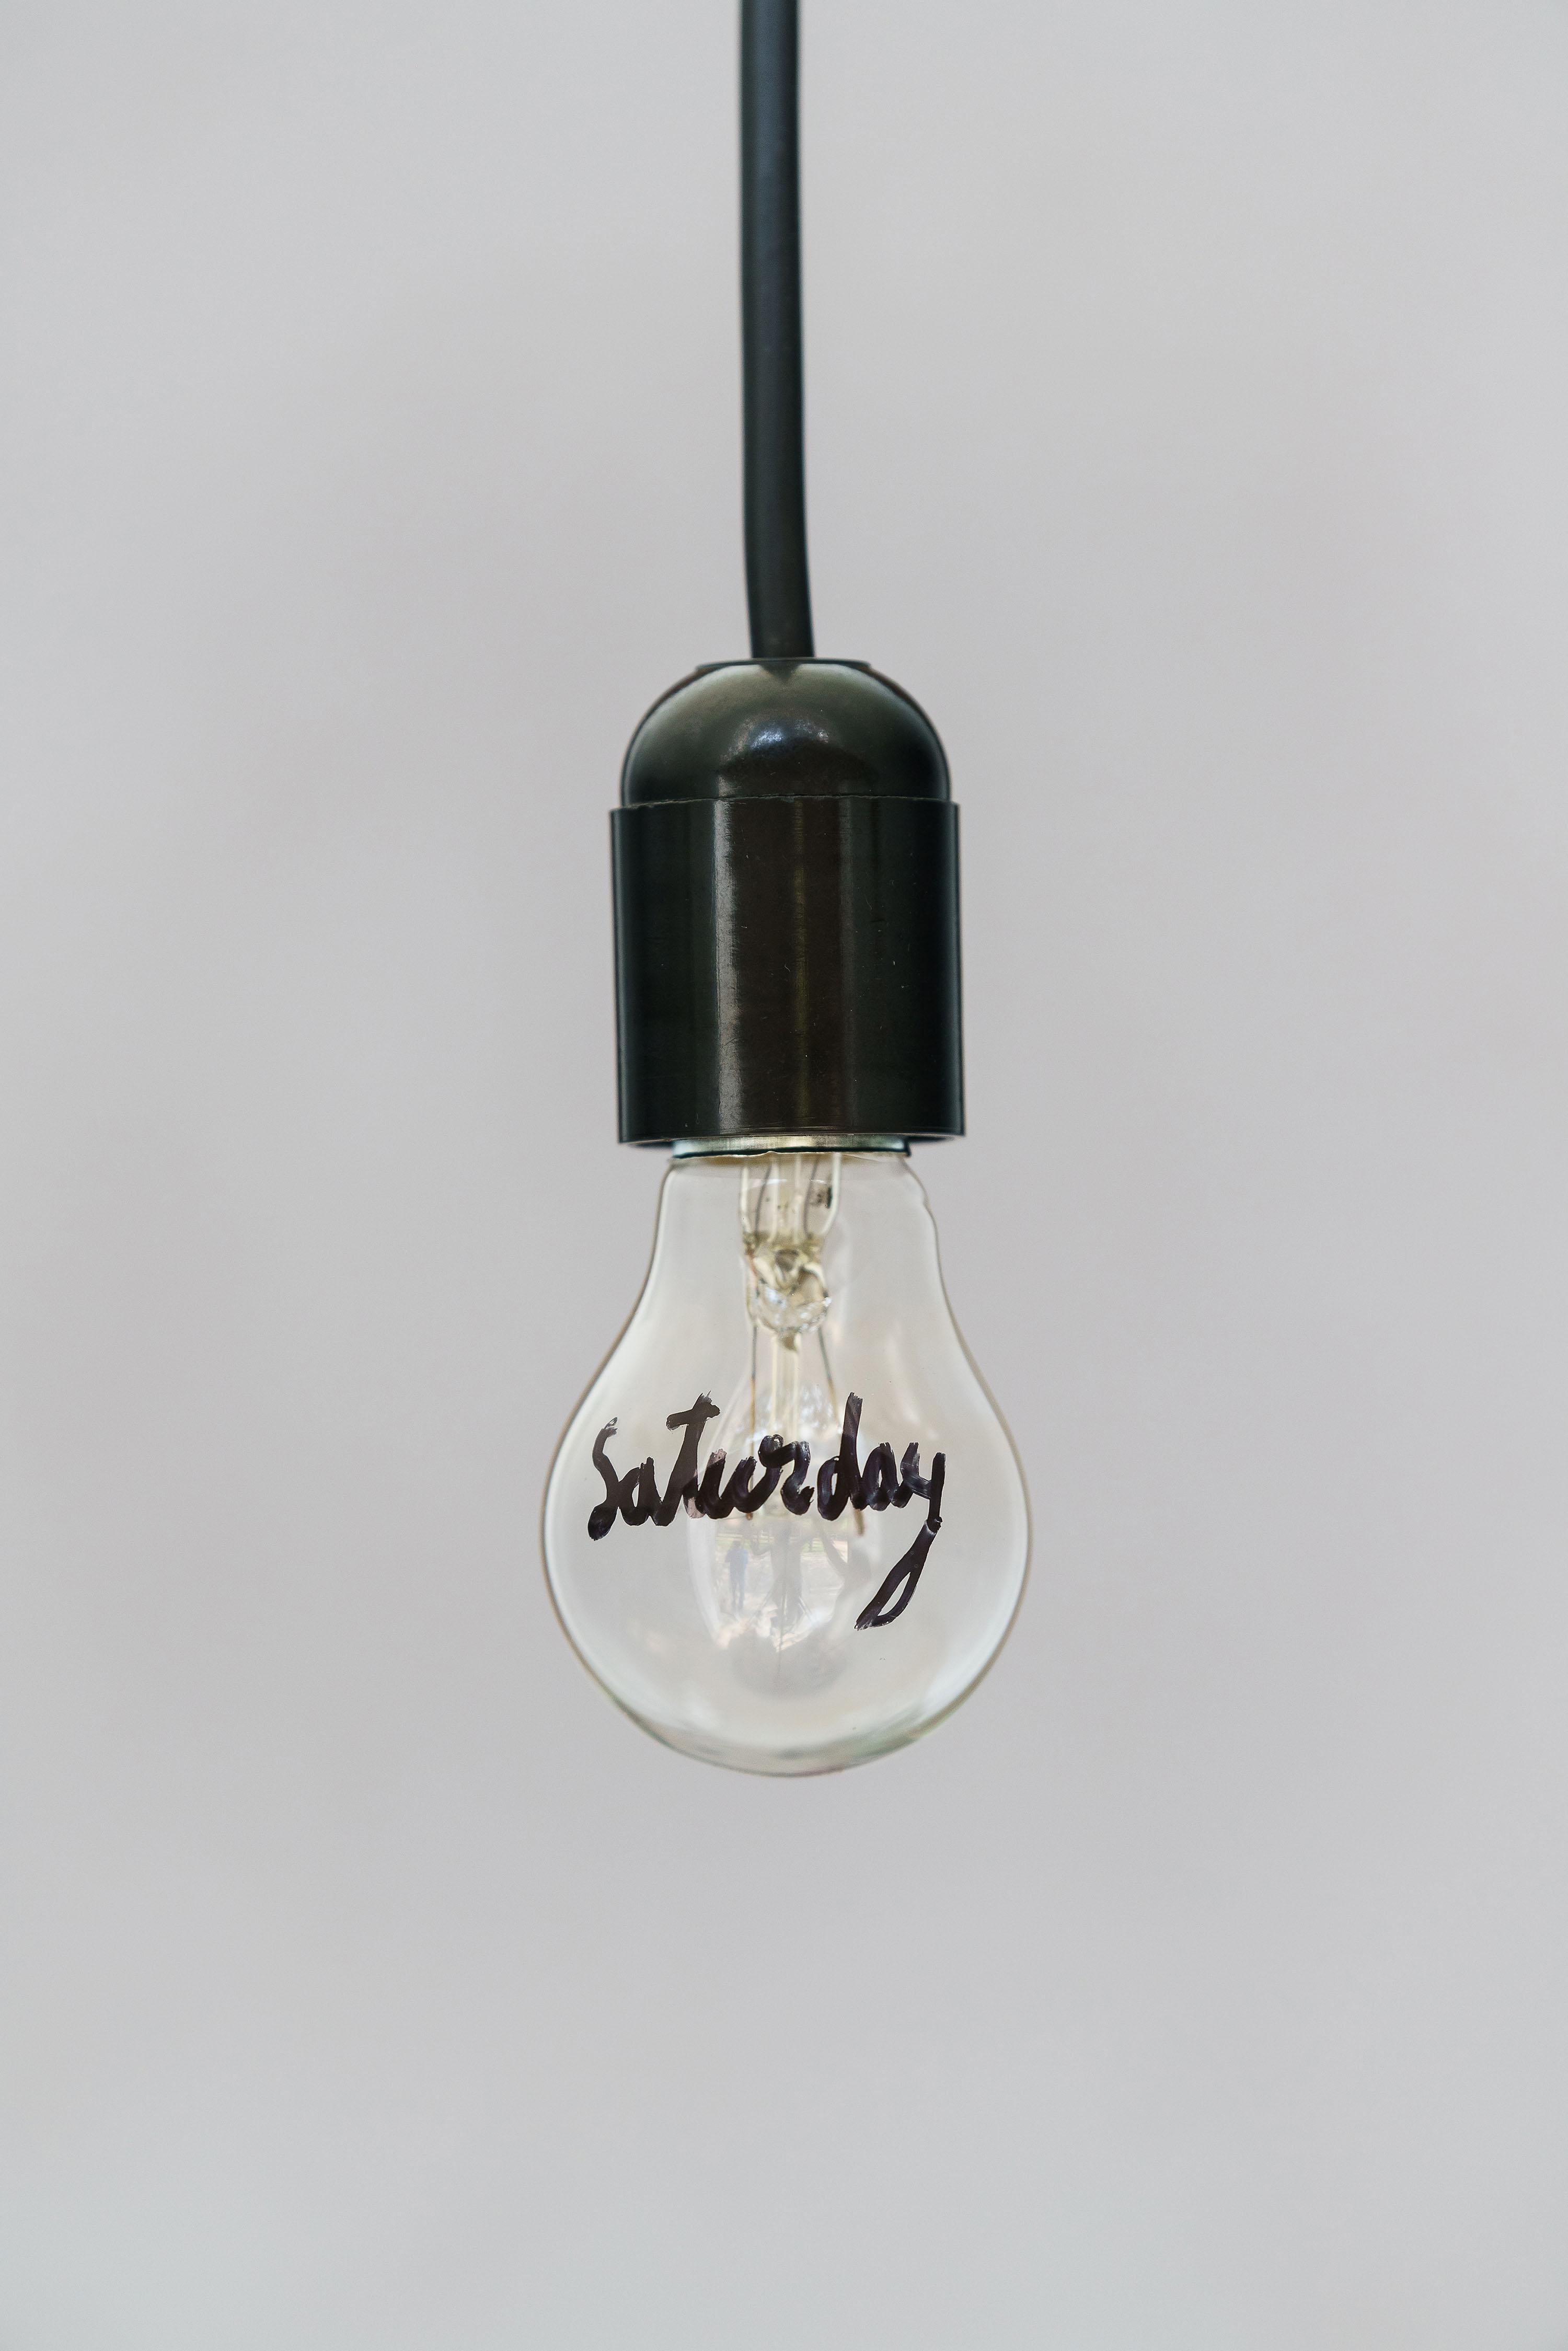 Belu-Simion Fainaru, Daylight, 2010 - 2015, Light bulb, ink, electric string, 10 x 5 x 2 cm; Photo: YAP Studio/Pavel Curagău; Courtesy the artist and Plan B Cluj